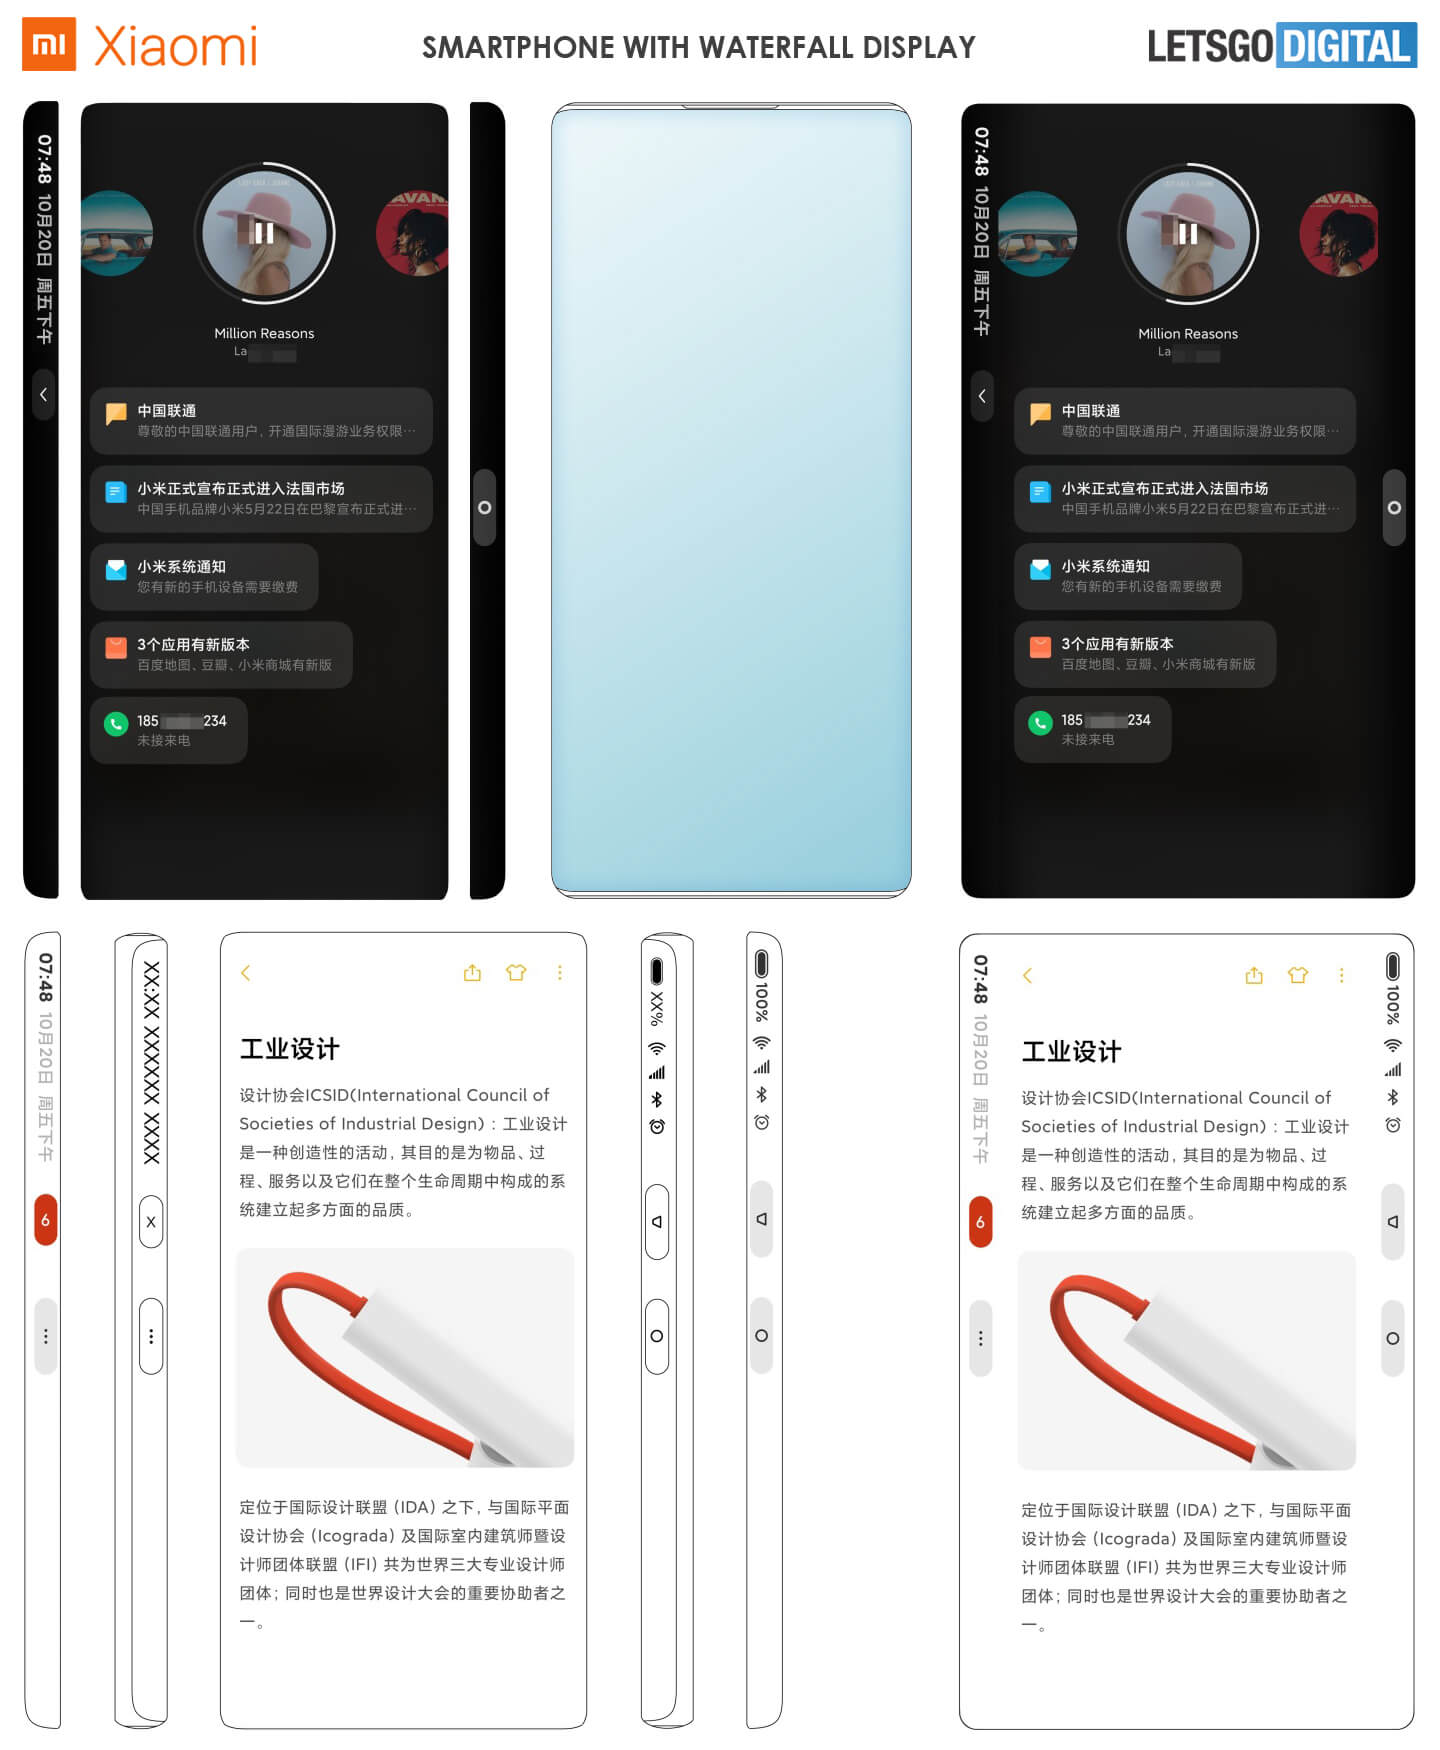 Xiaomi telefoon waterfall display